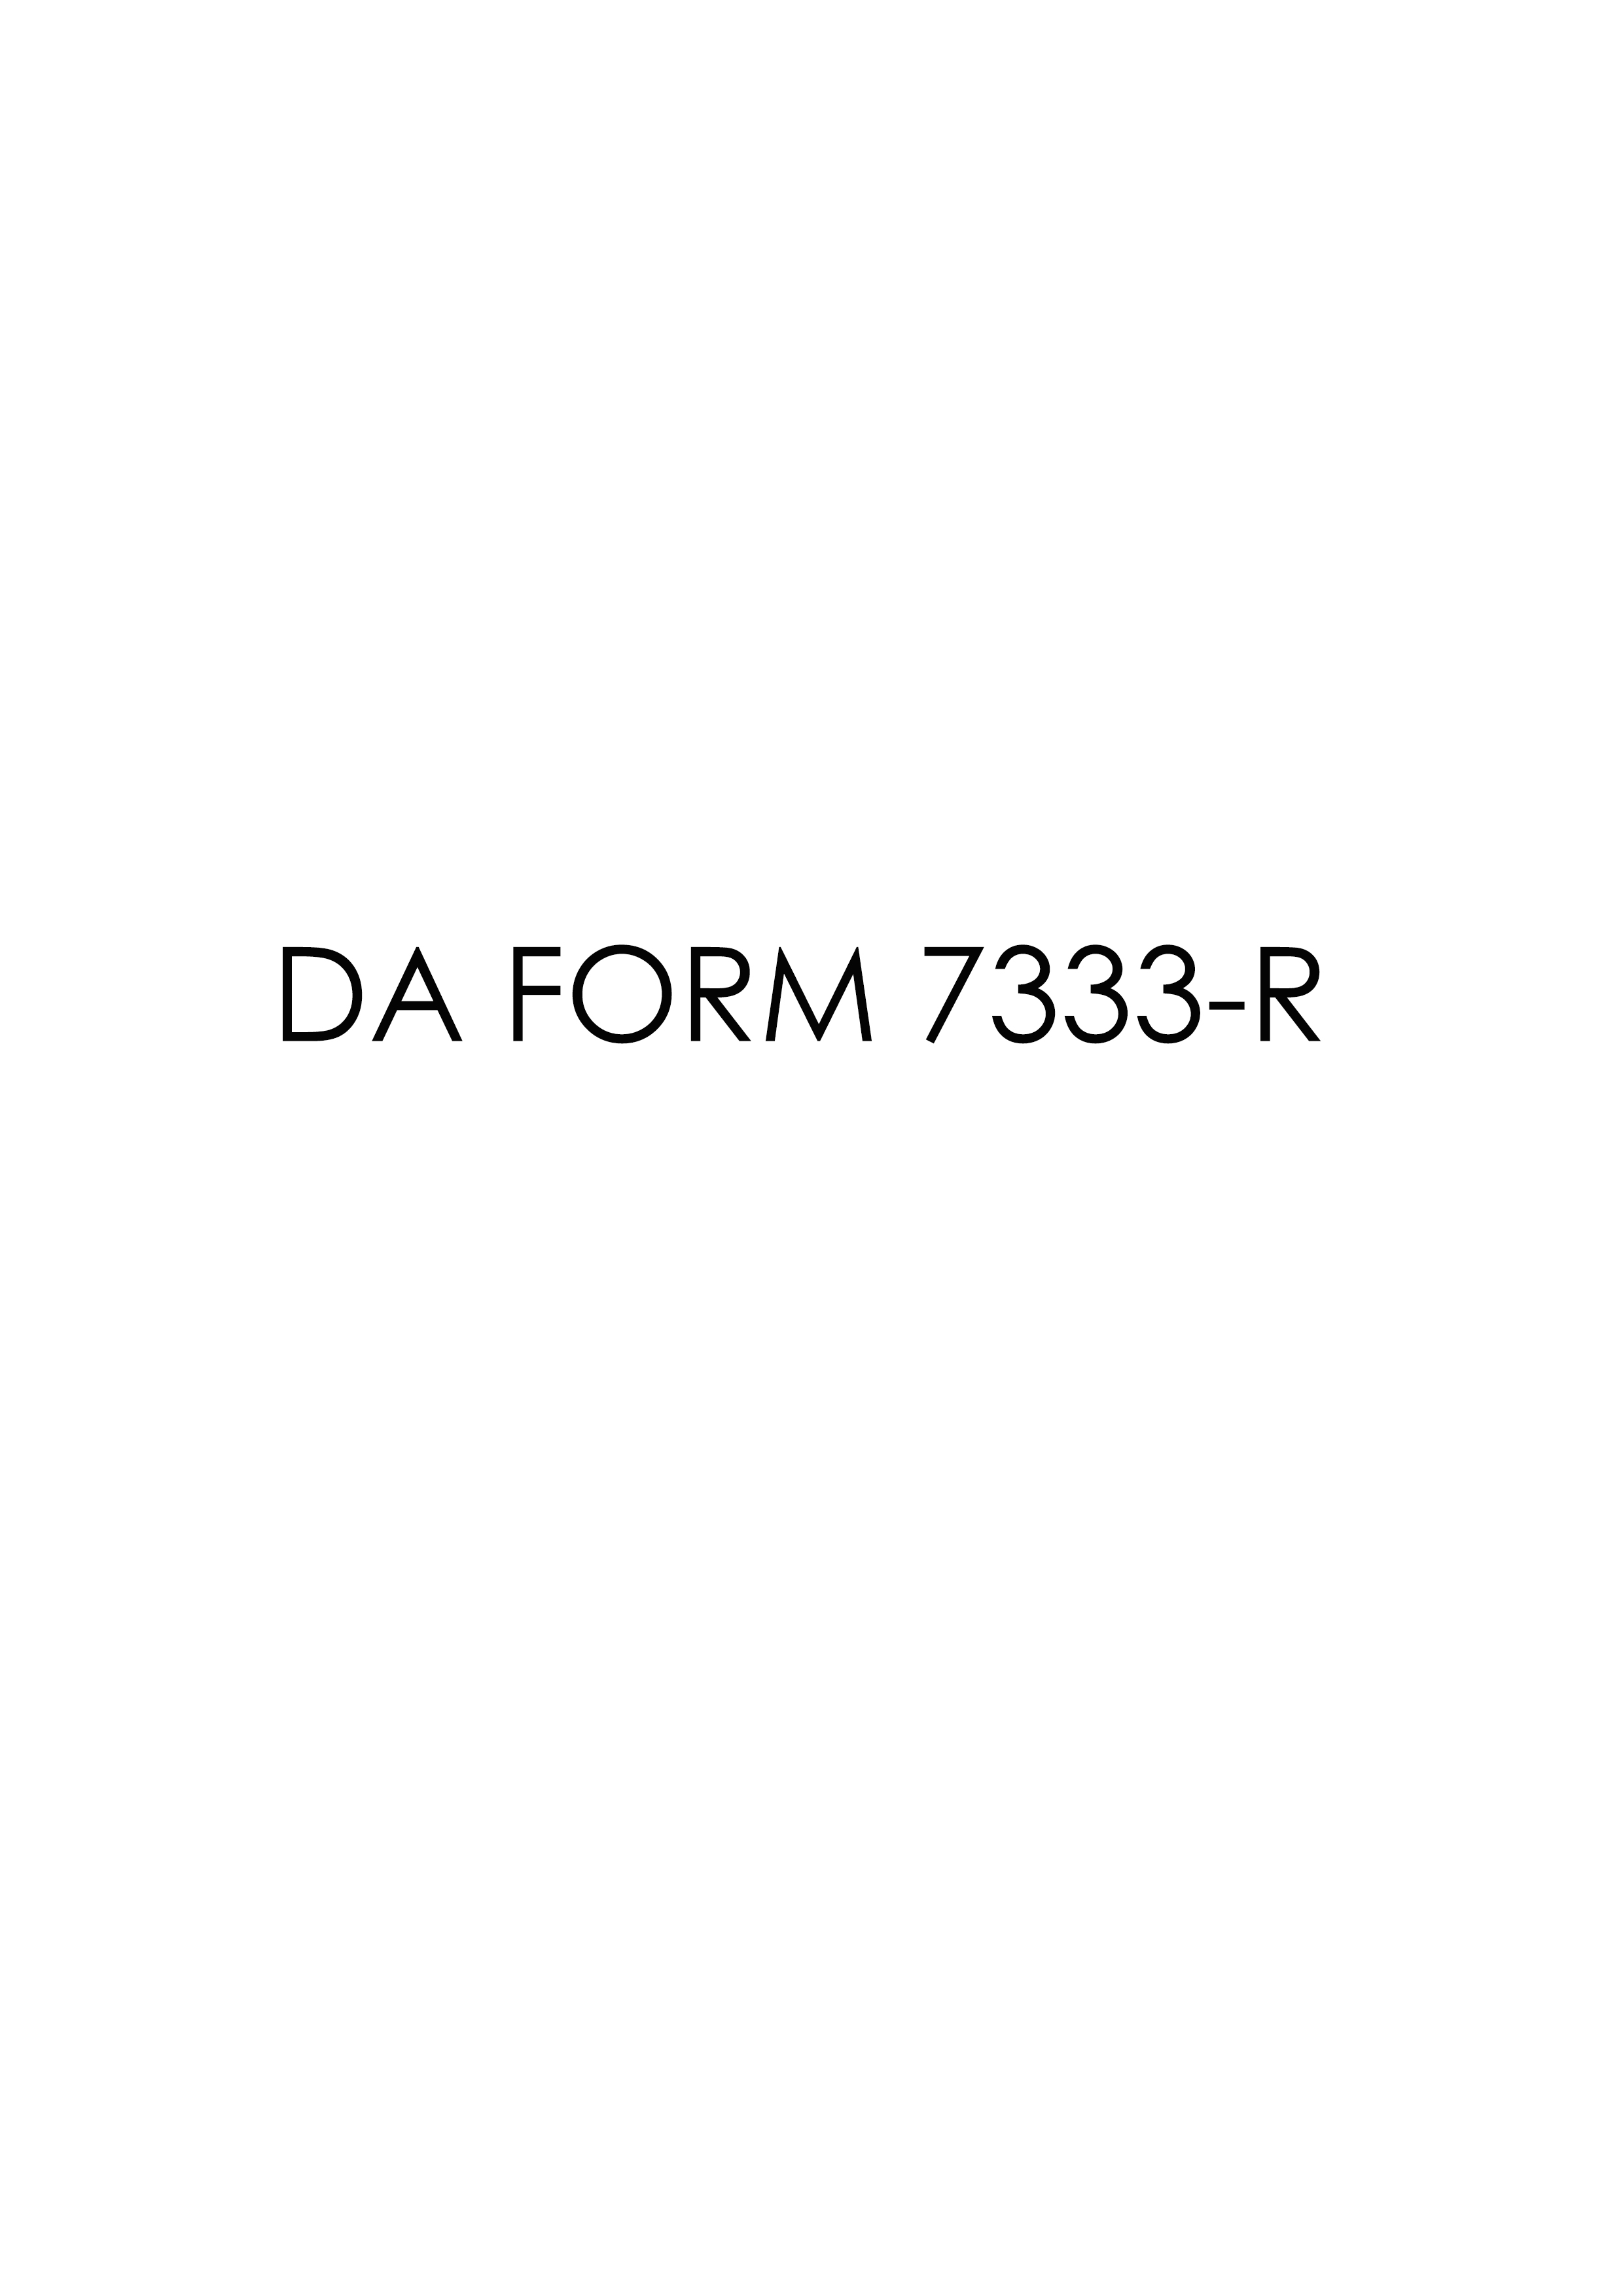 da Form 7333-R fillable